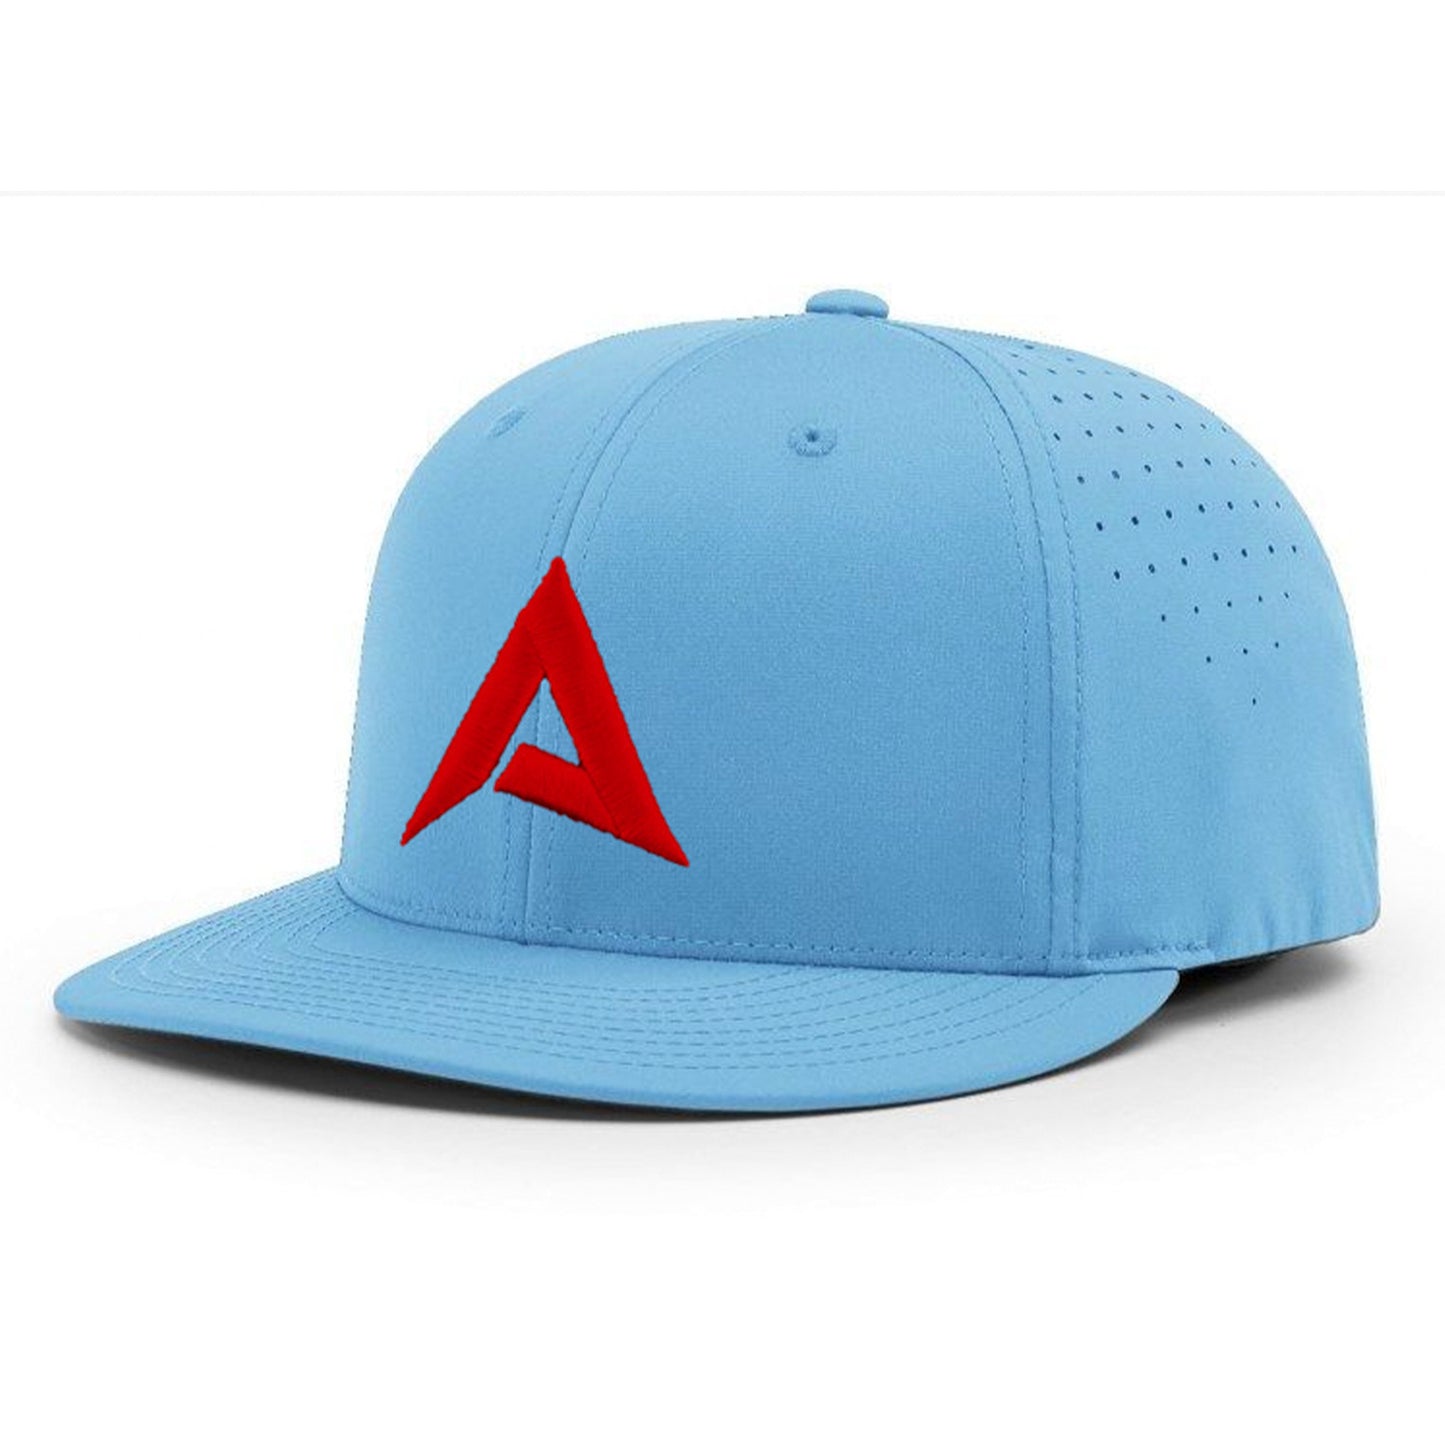 Anarchy CA i8503 Performance Hat - New Logo - Carolina/Red